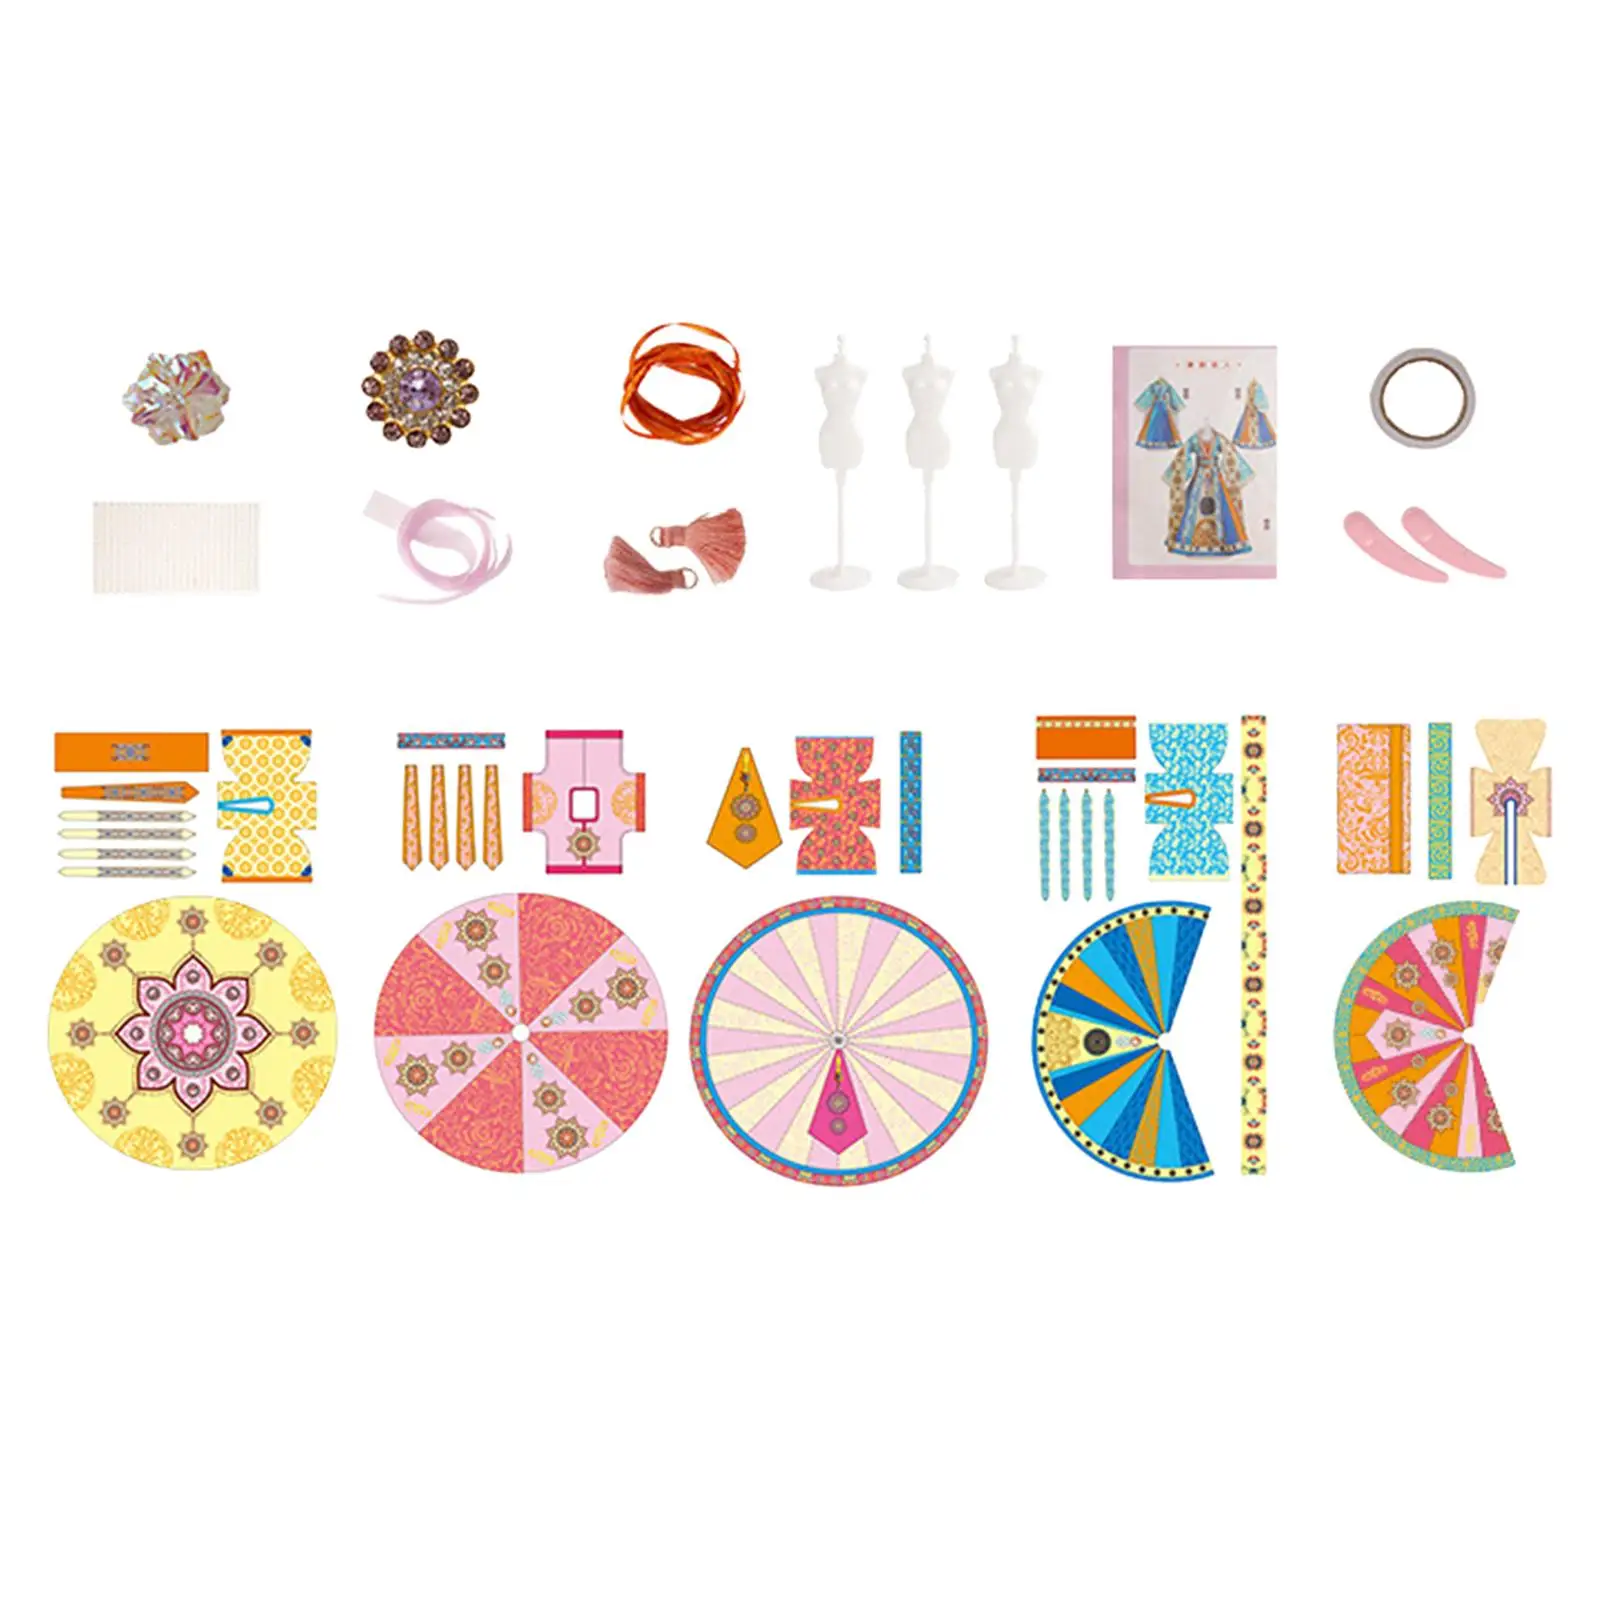 Fashion Design Kits Creativity Princess Dress Clothes Set DIY Arts Crafts Kits for Girls Age 8-12 Children Beginner